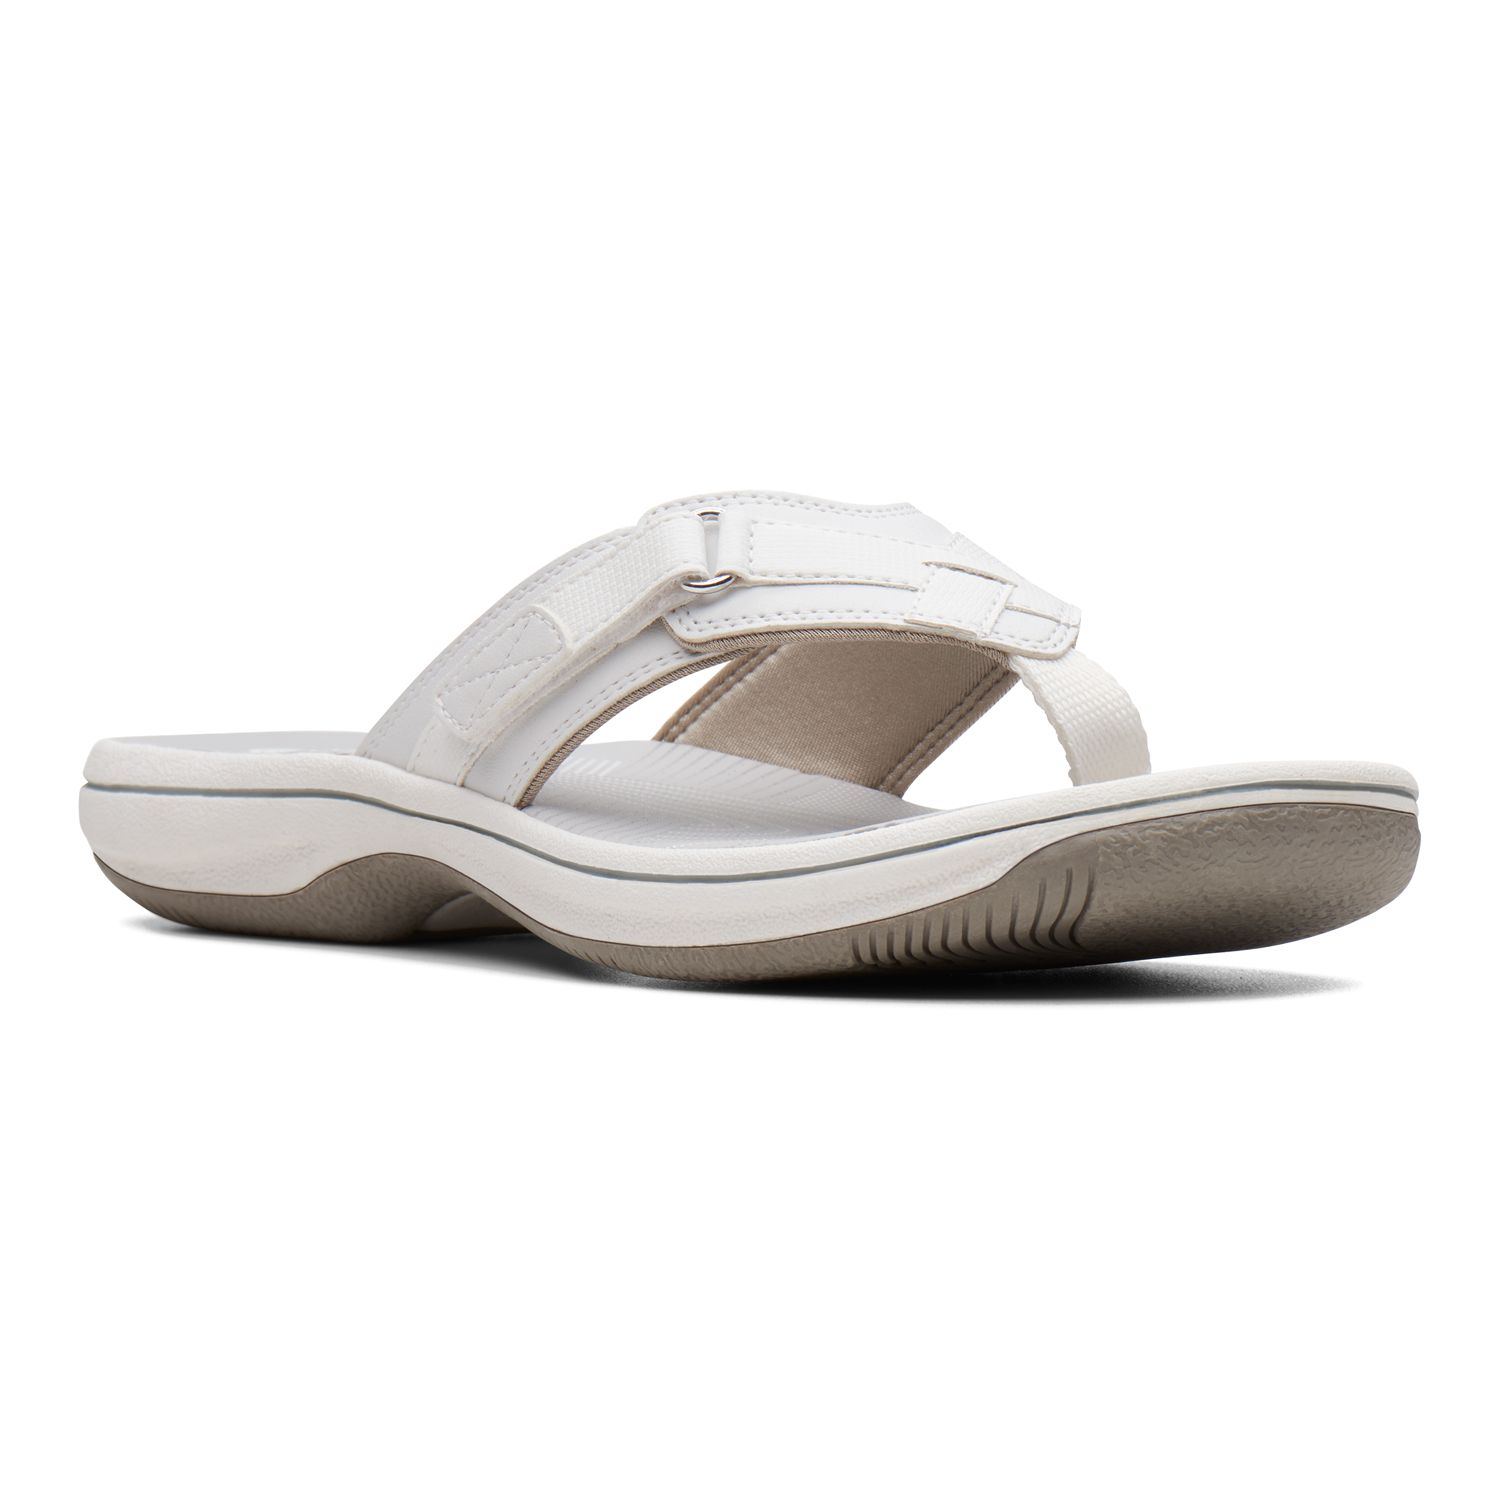 white clark sandals